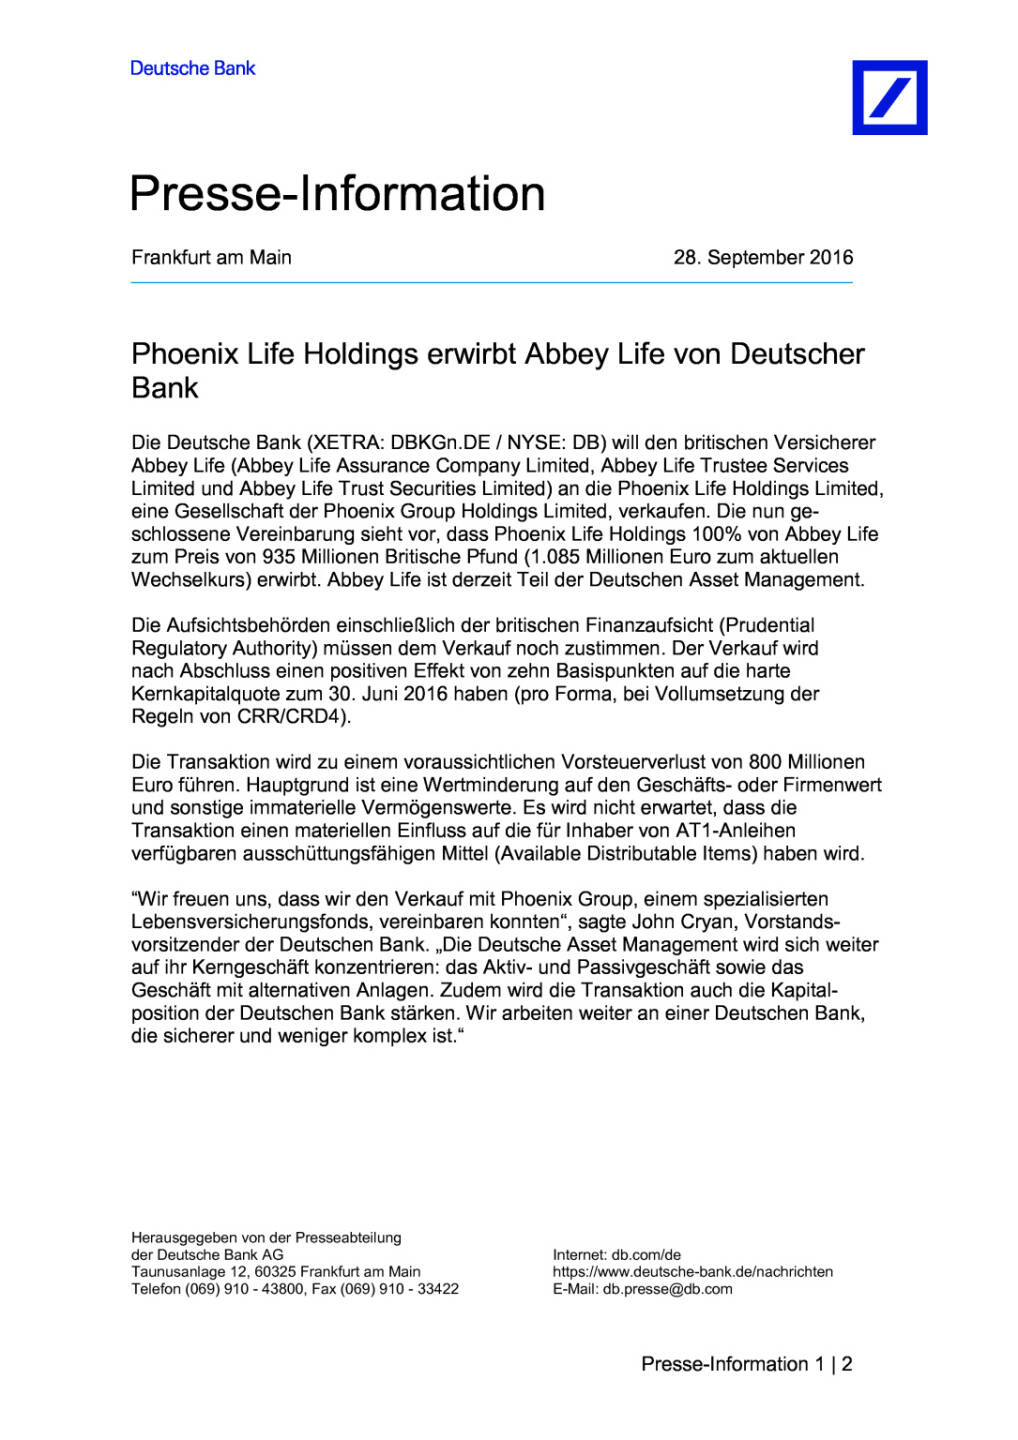 Phoenix Life Holdings erwirbt Abbey Life von Deutscher Bank , Seite 1/2, komplettes Dokument unter http://boerse-social.com/static/uploads/file_1840_phoenix_life_holdings_erwirbt_abbey_life_von_deutscher_bank.pdf